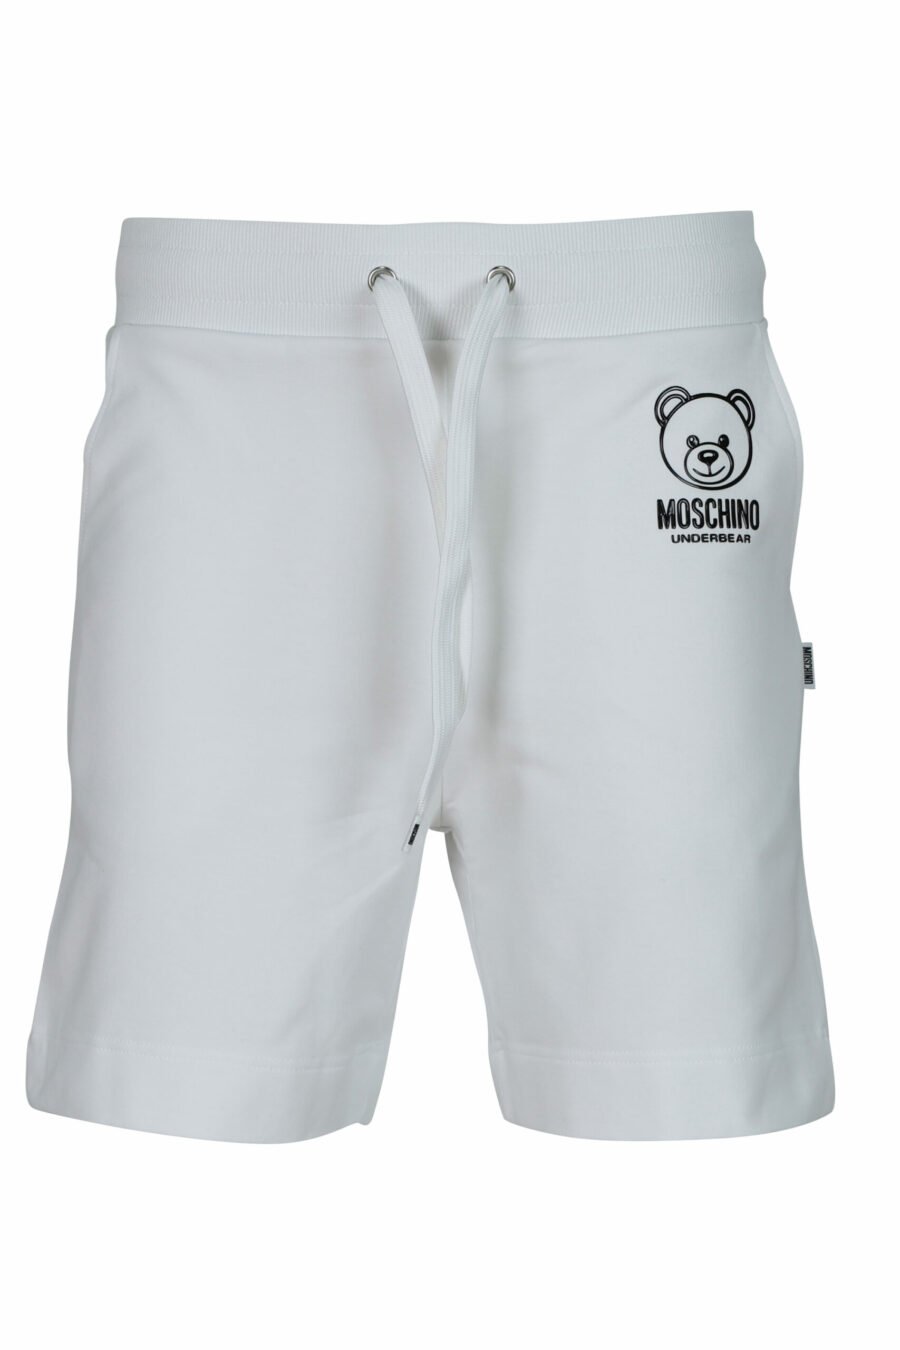 Tracksuit bottoms white with black rubberised "underbear" bear mini-logo - 667113622149 scaled